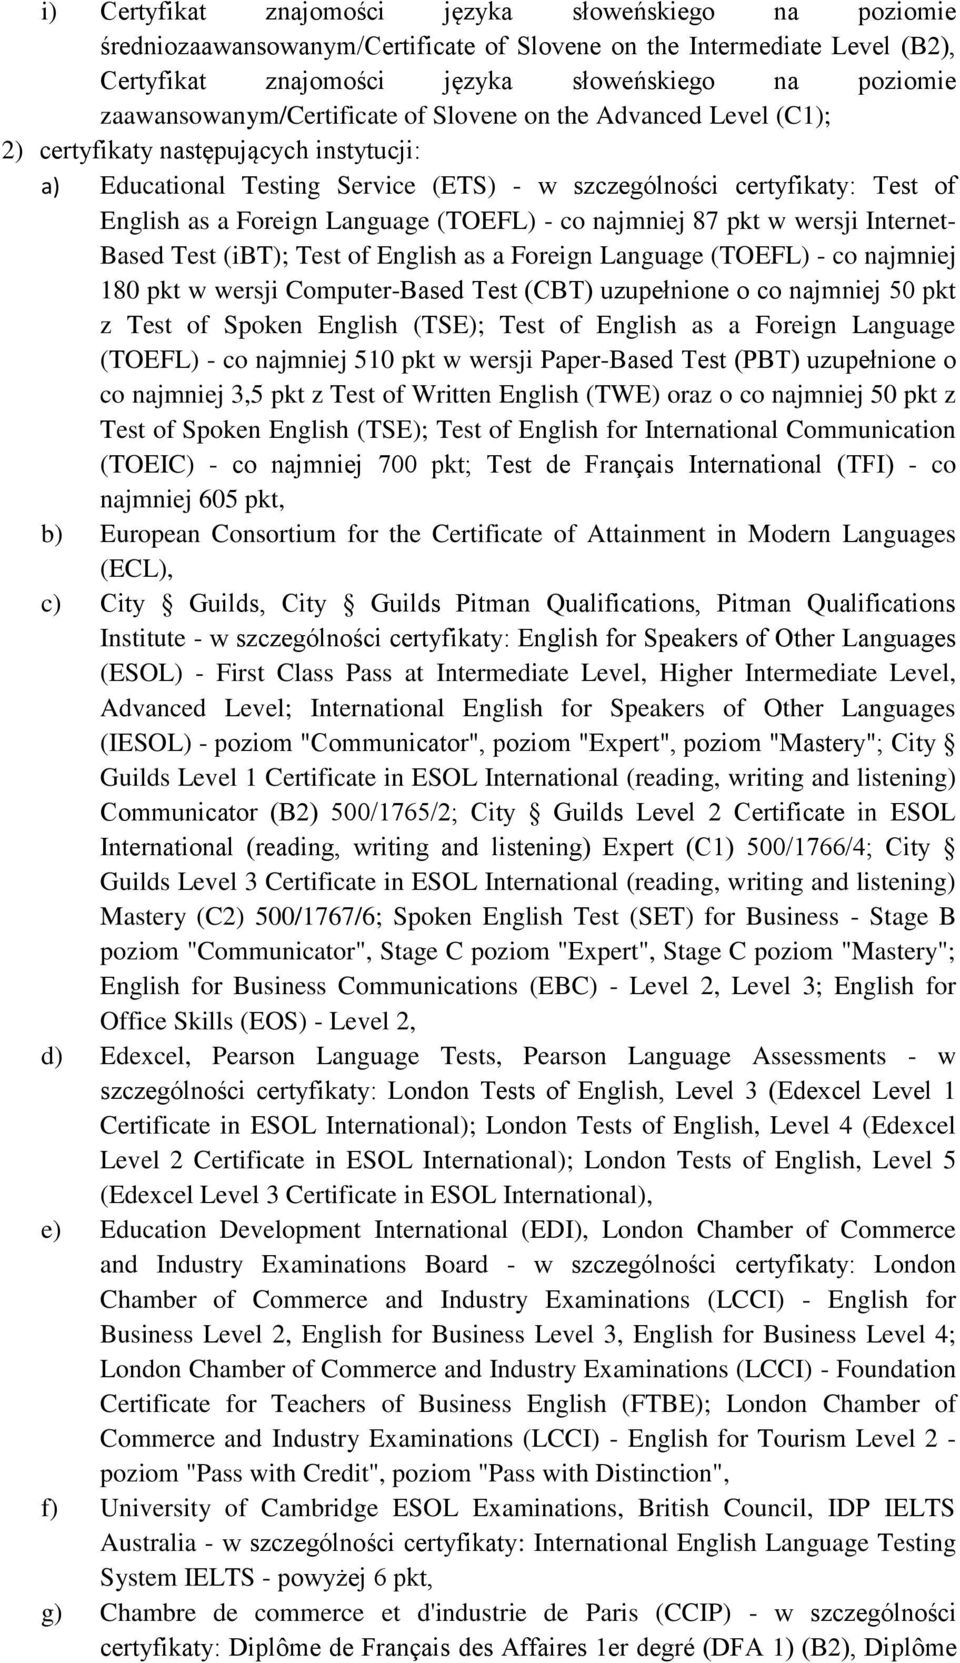 Foreign Language (TOEFL) - co najmniej 87 pkt w wersji Internet- Based Test (ibt); Test of English as a Foreign Language (TOEFL) - co najmniej 180 pkt w wersji Computer-Based Test (CBT) uzupełnione o